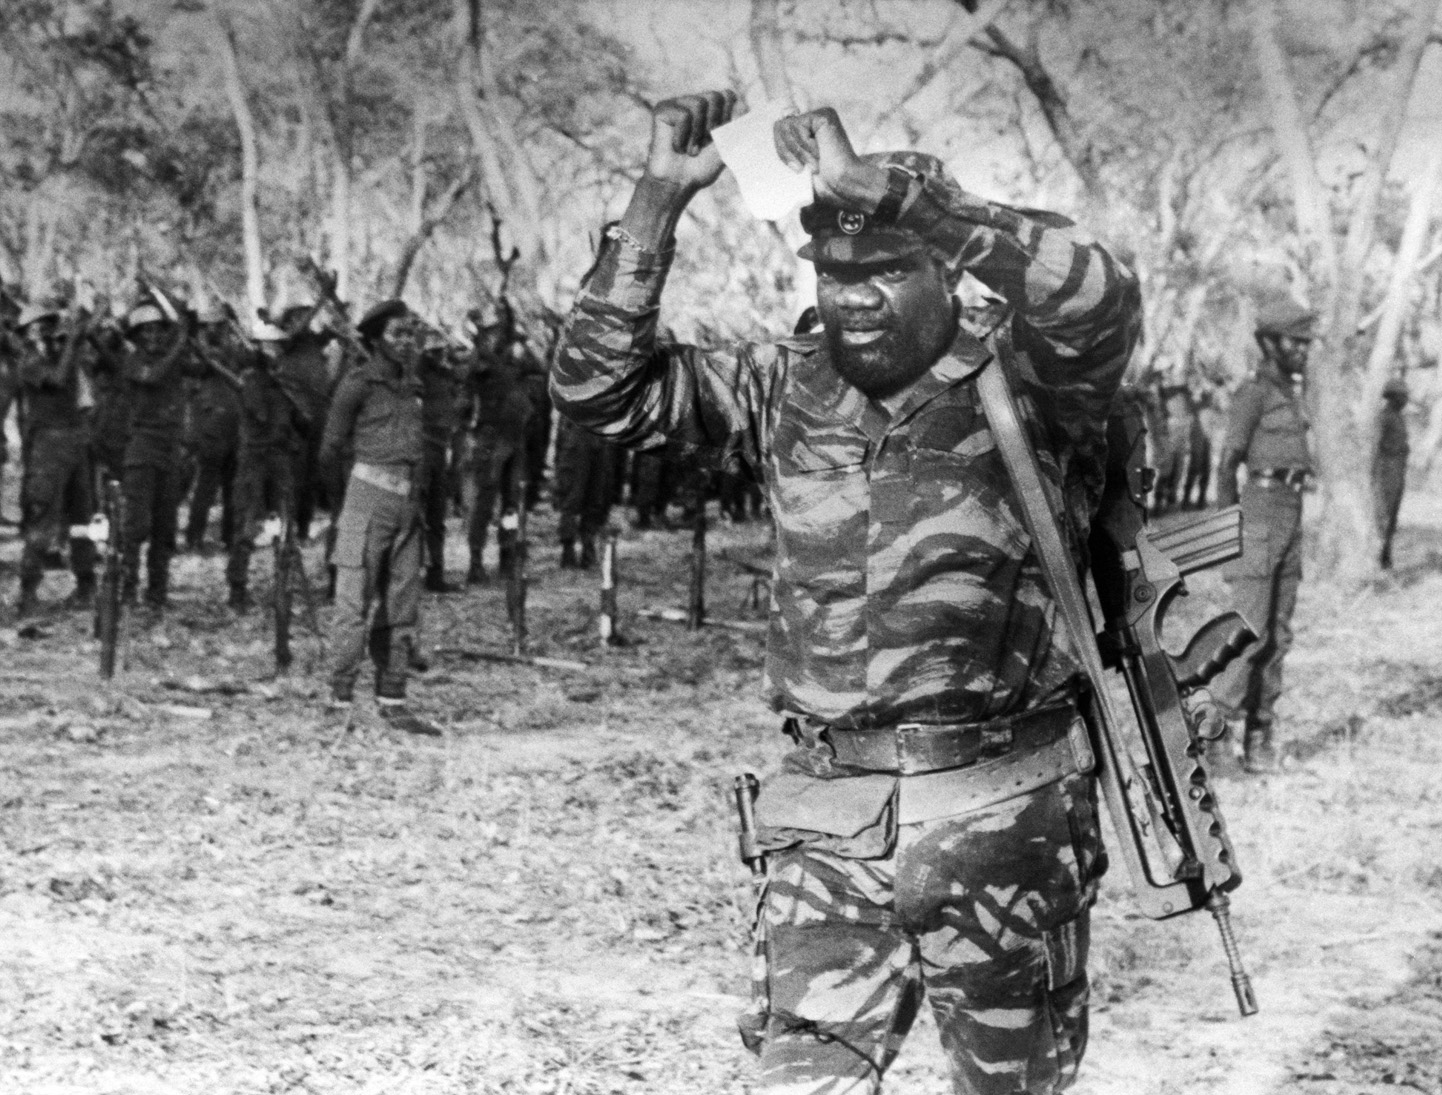 Jonas Savimbi led the UNITA forces.